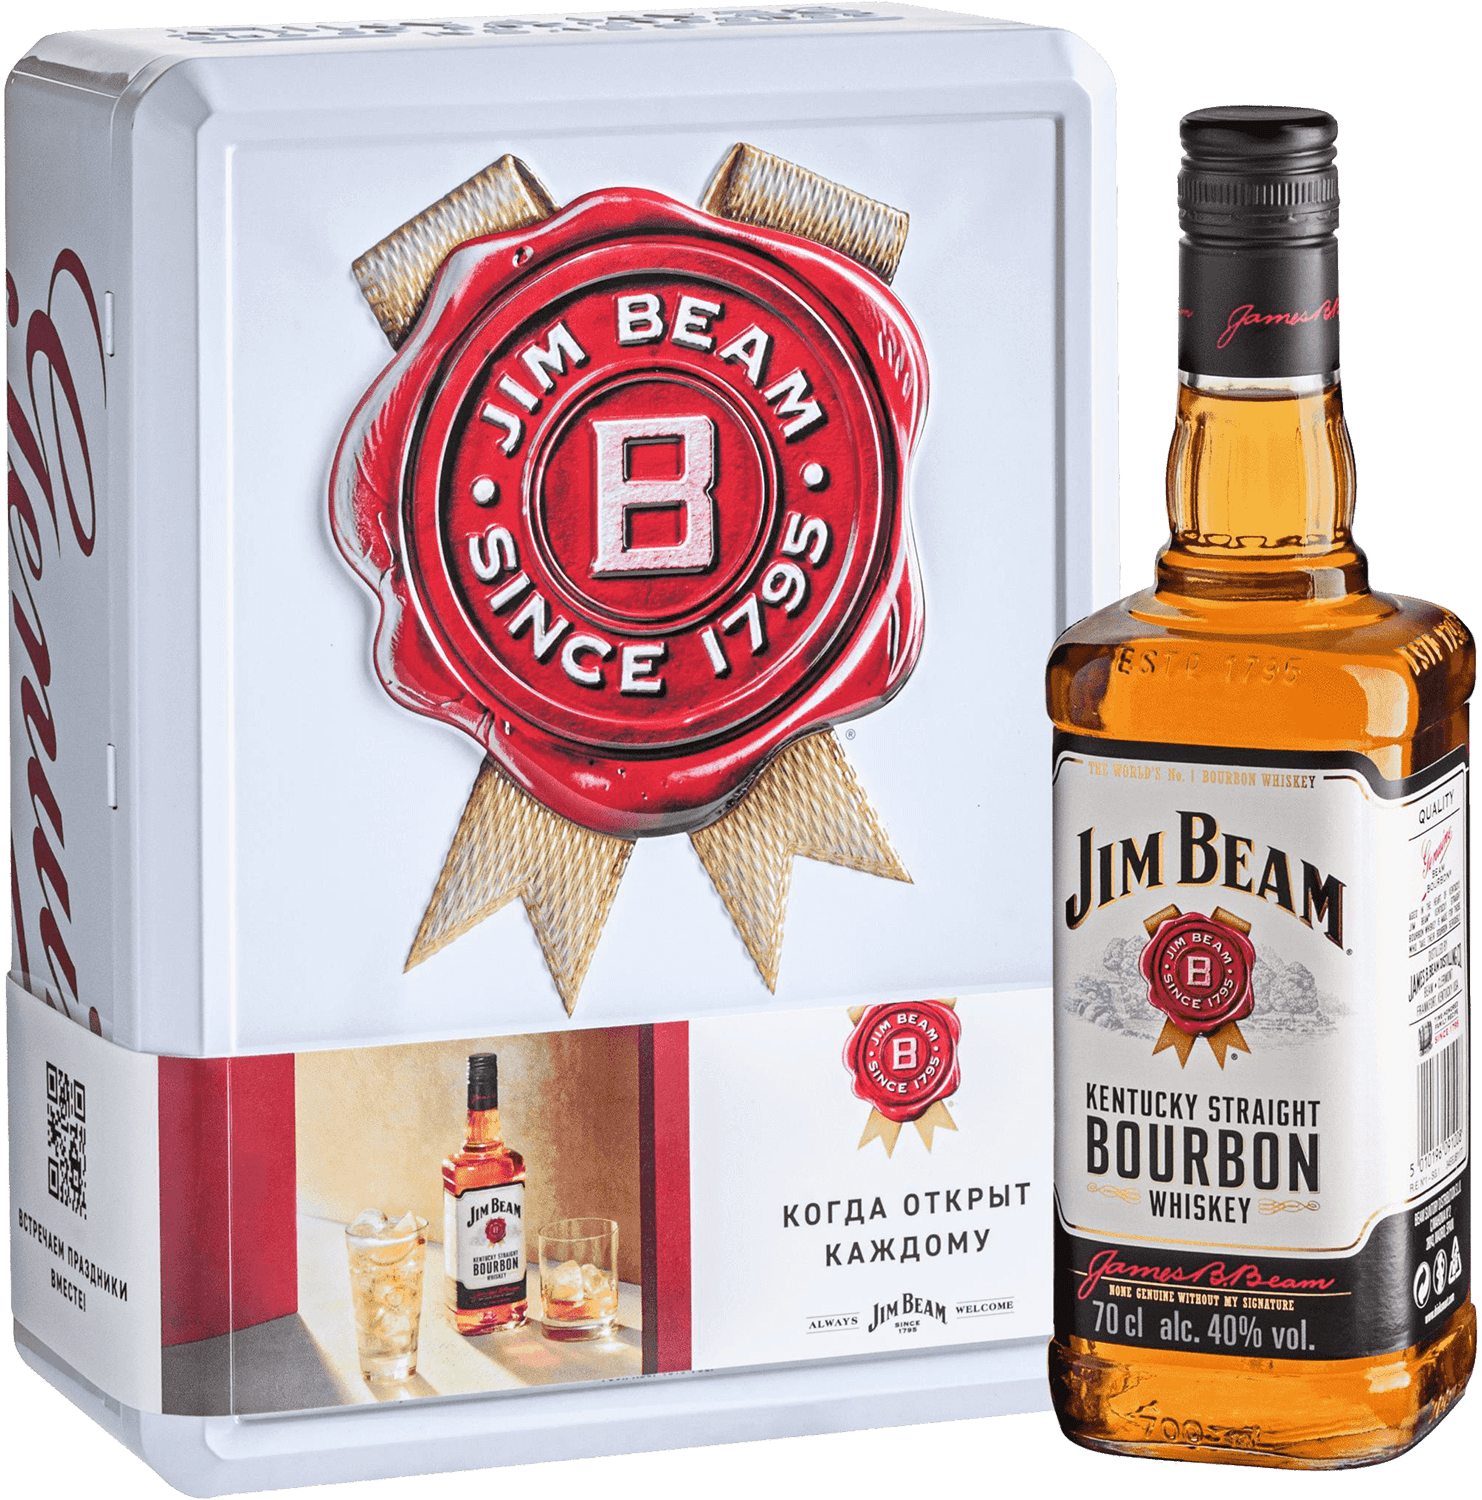 Jim Beam Kentucky Straight Bourbon Whiskey (gift box with 2 glasses) wild turkey rare breed kentucky straight bourbon whiskey gift box